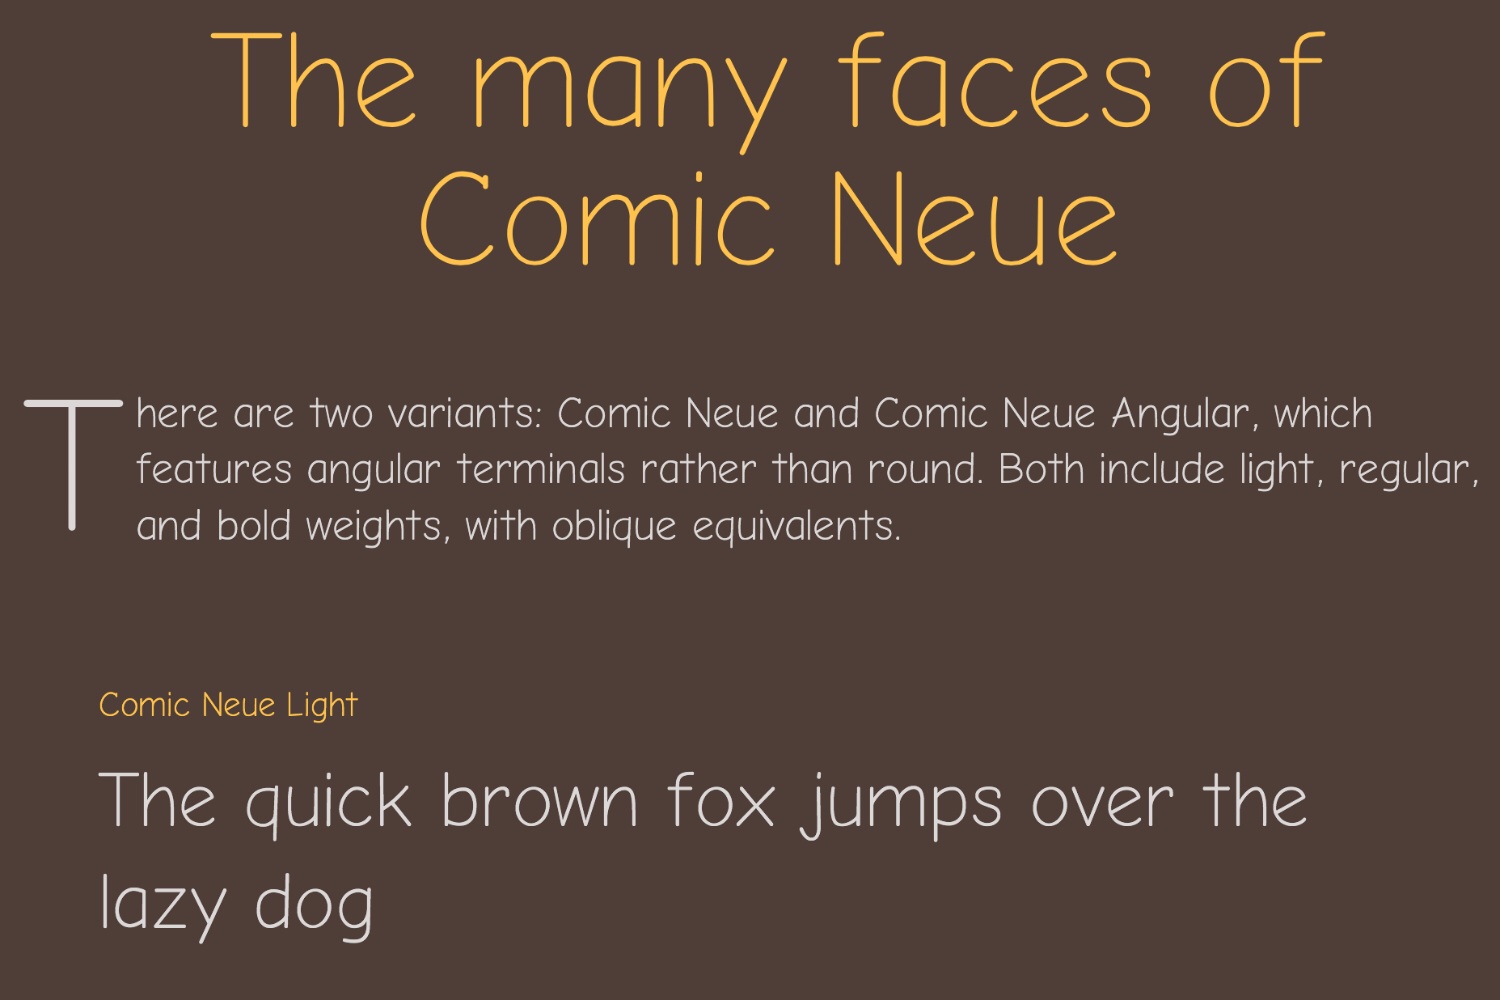 compare comic neue to comic sans